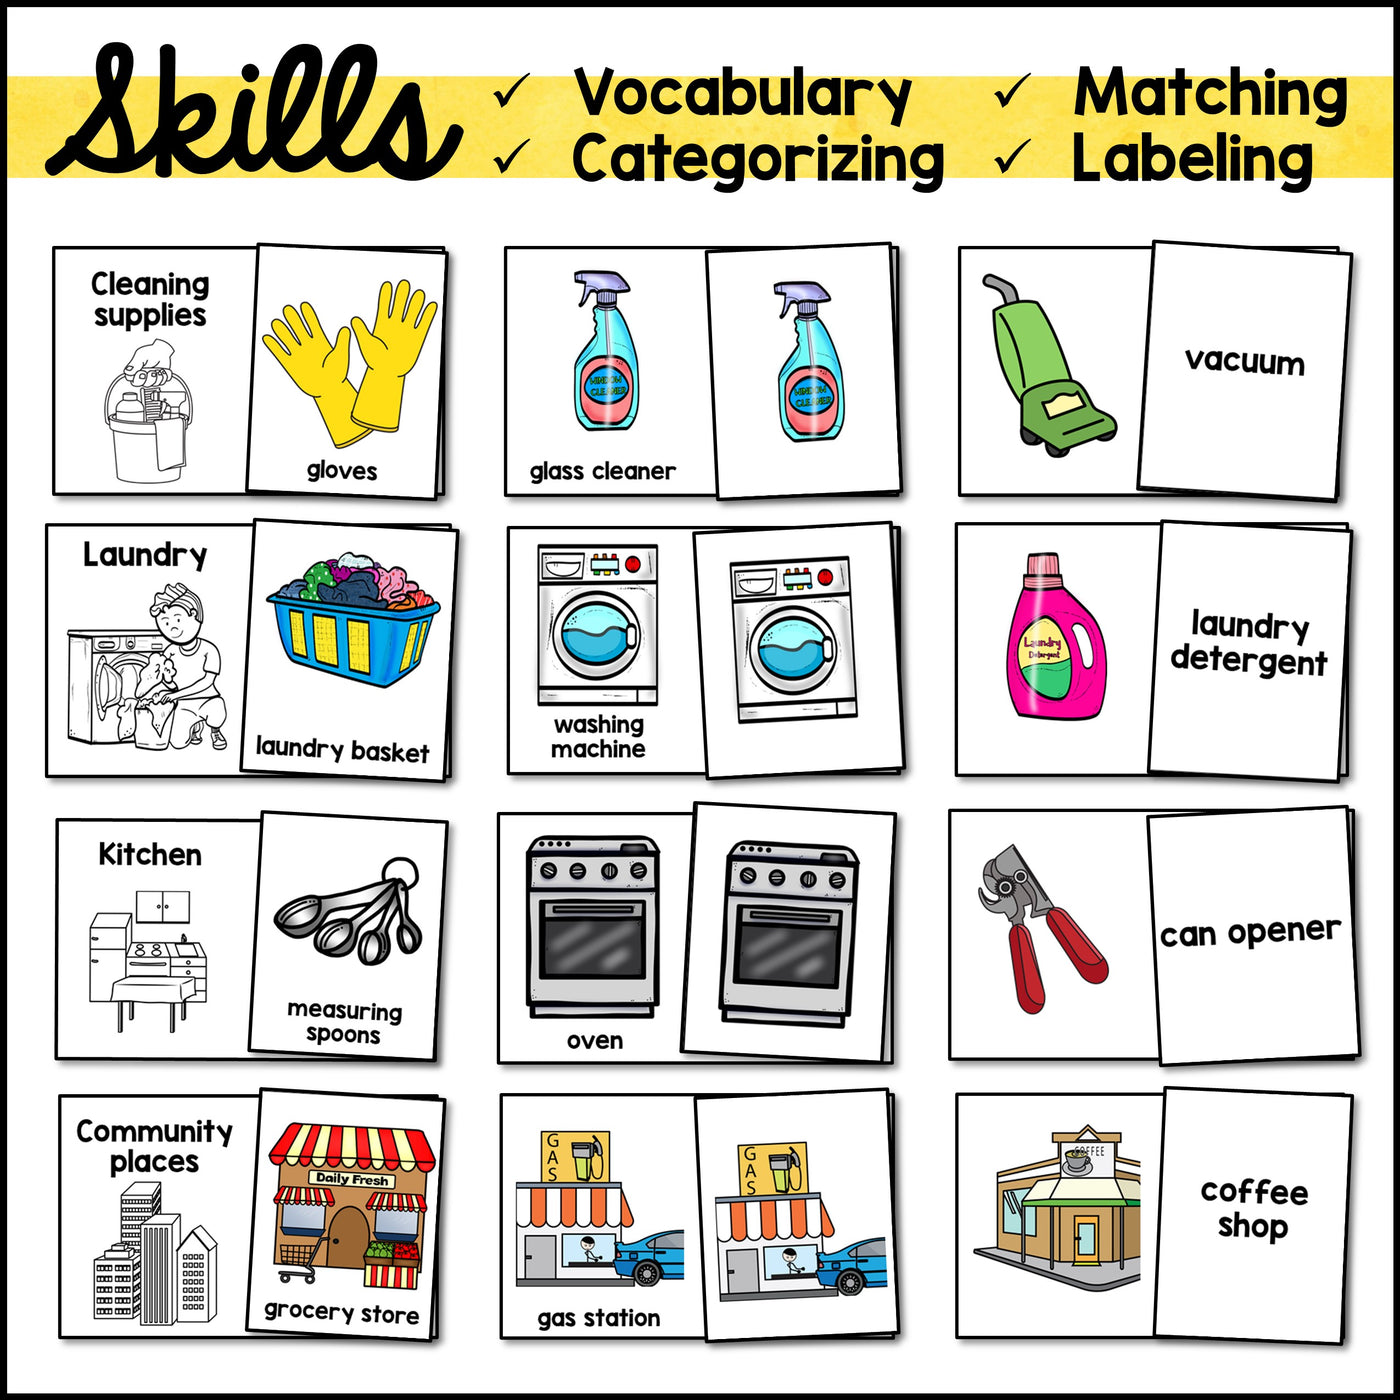 Life Skills Task Boxes - Community Signs Vocabulary